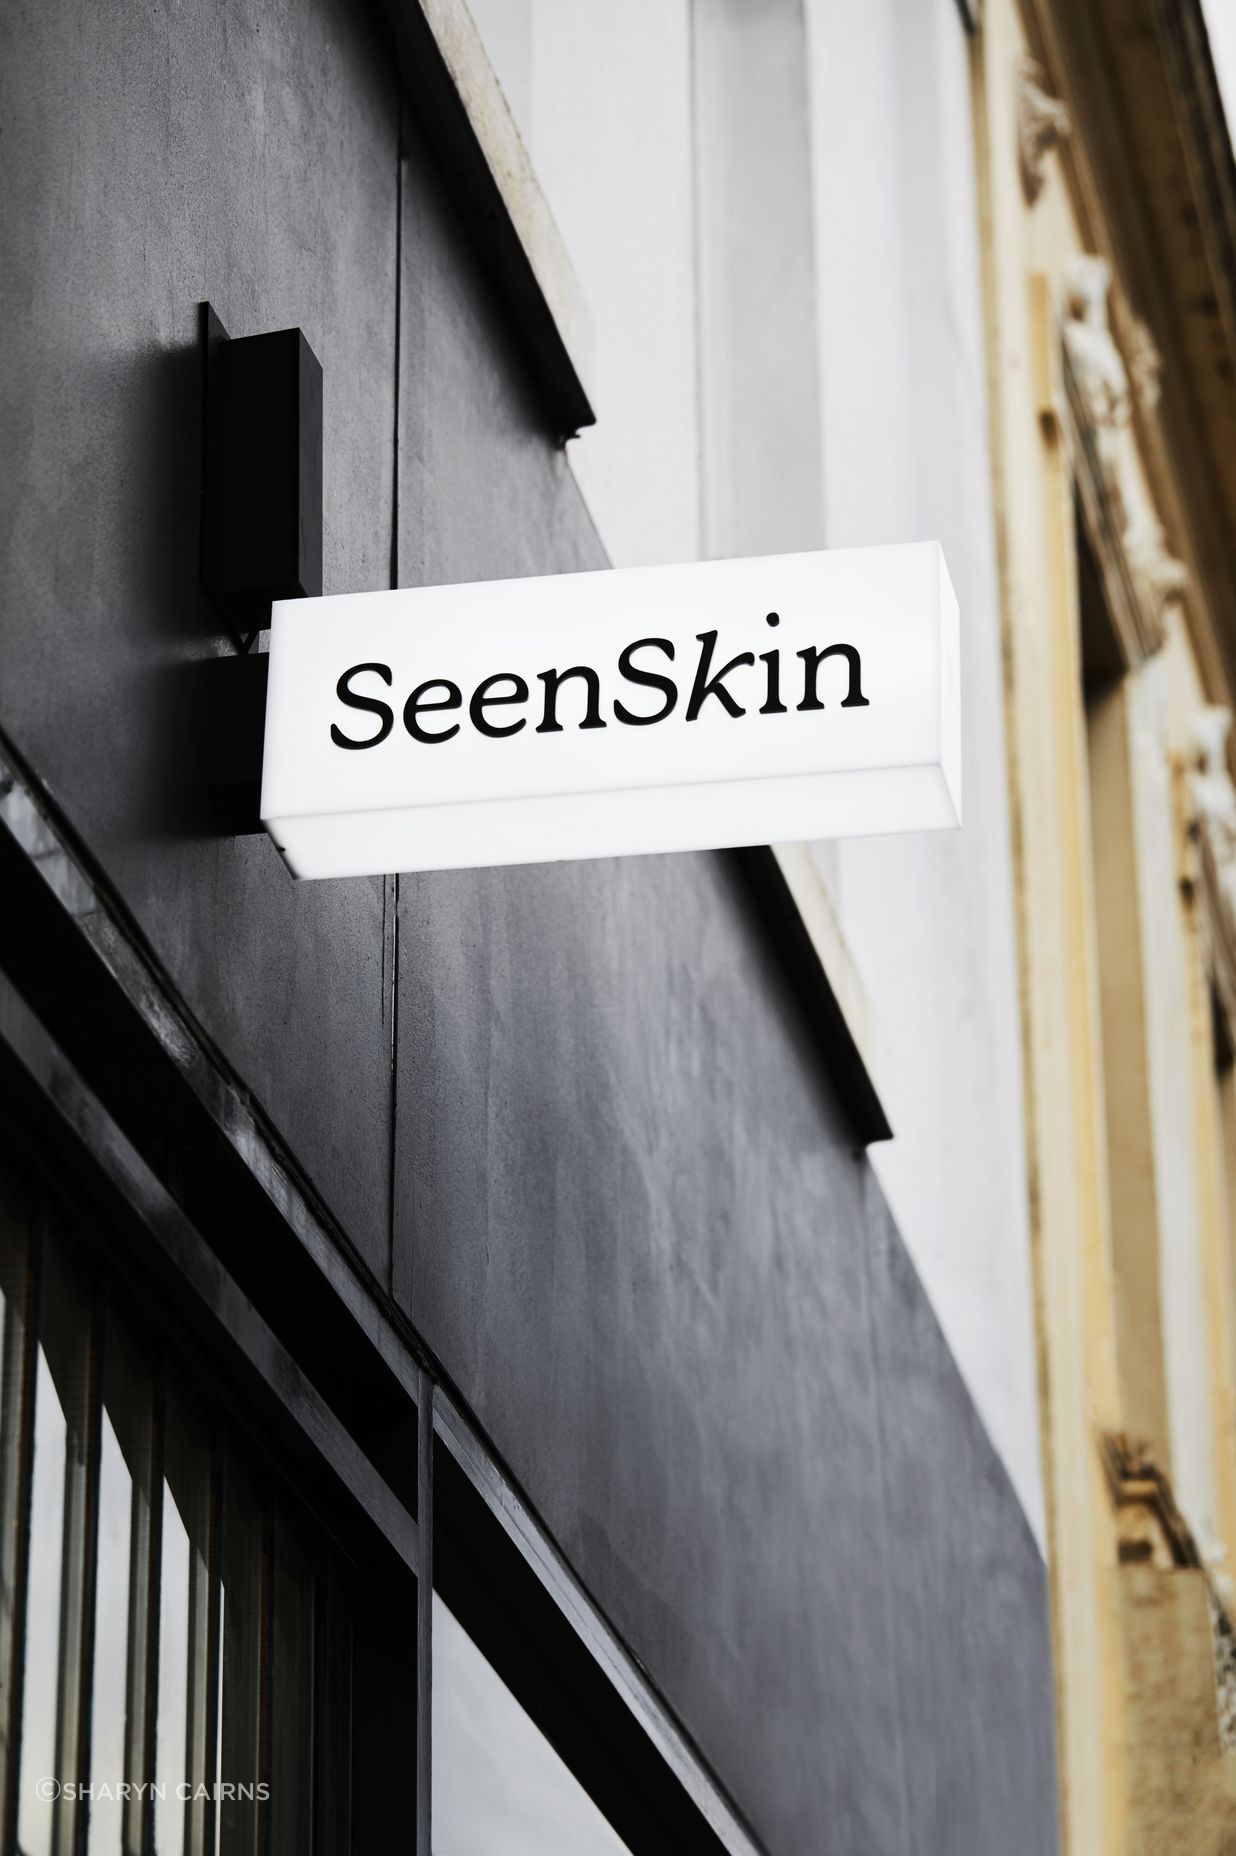 Seen Skin